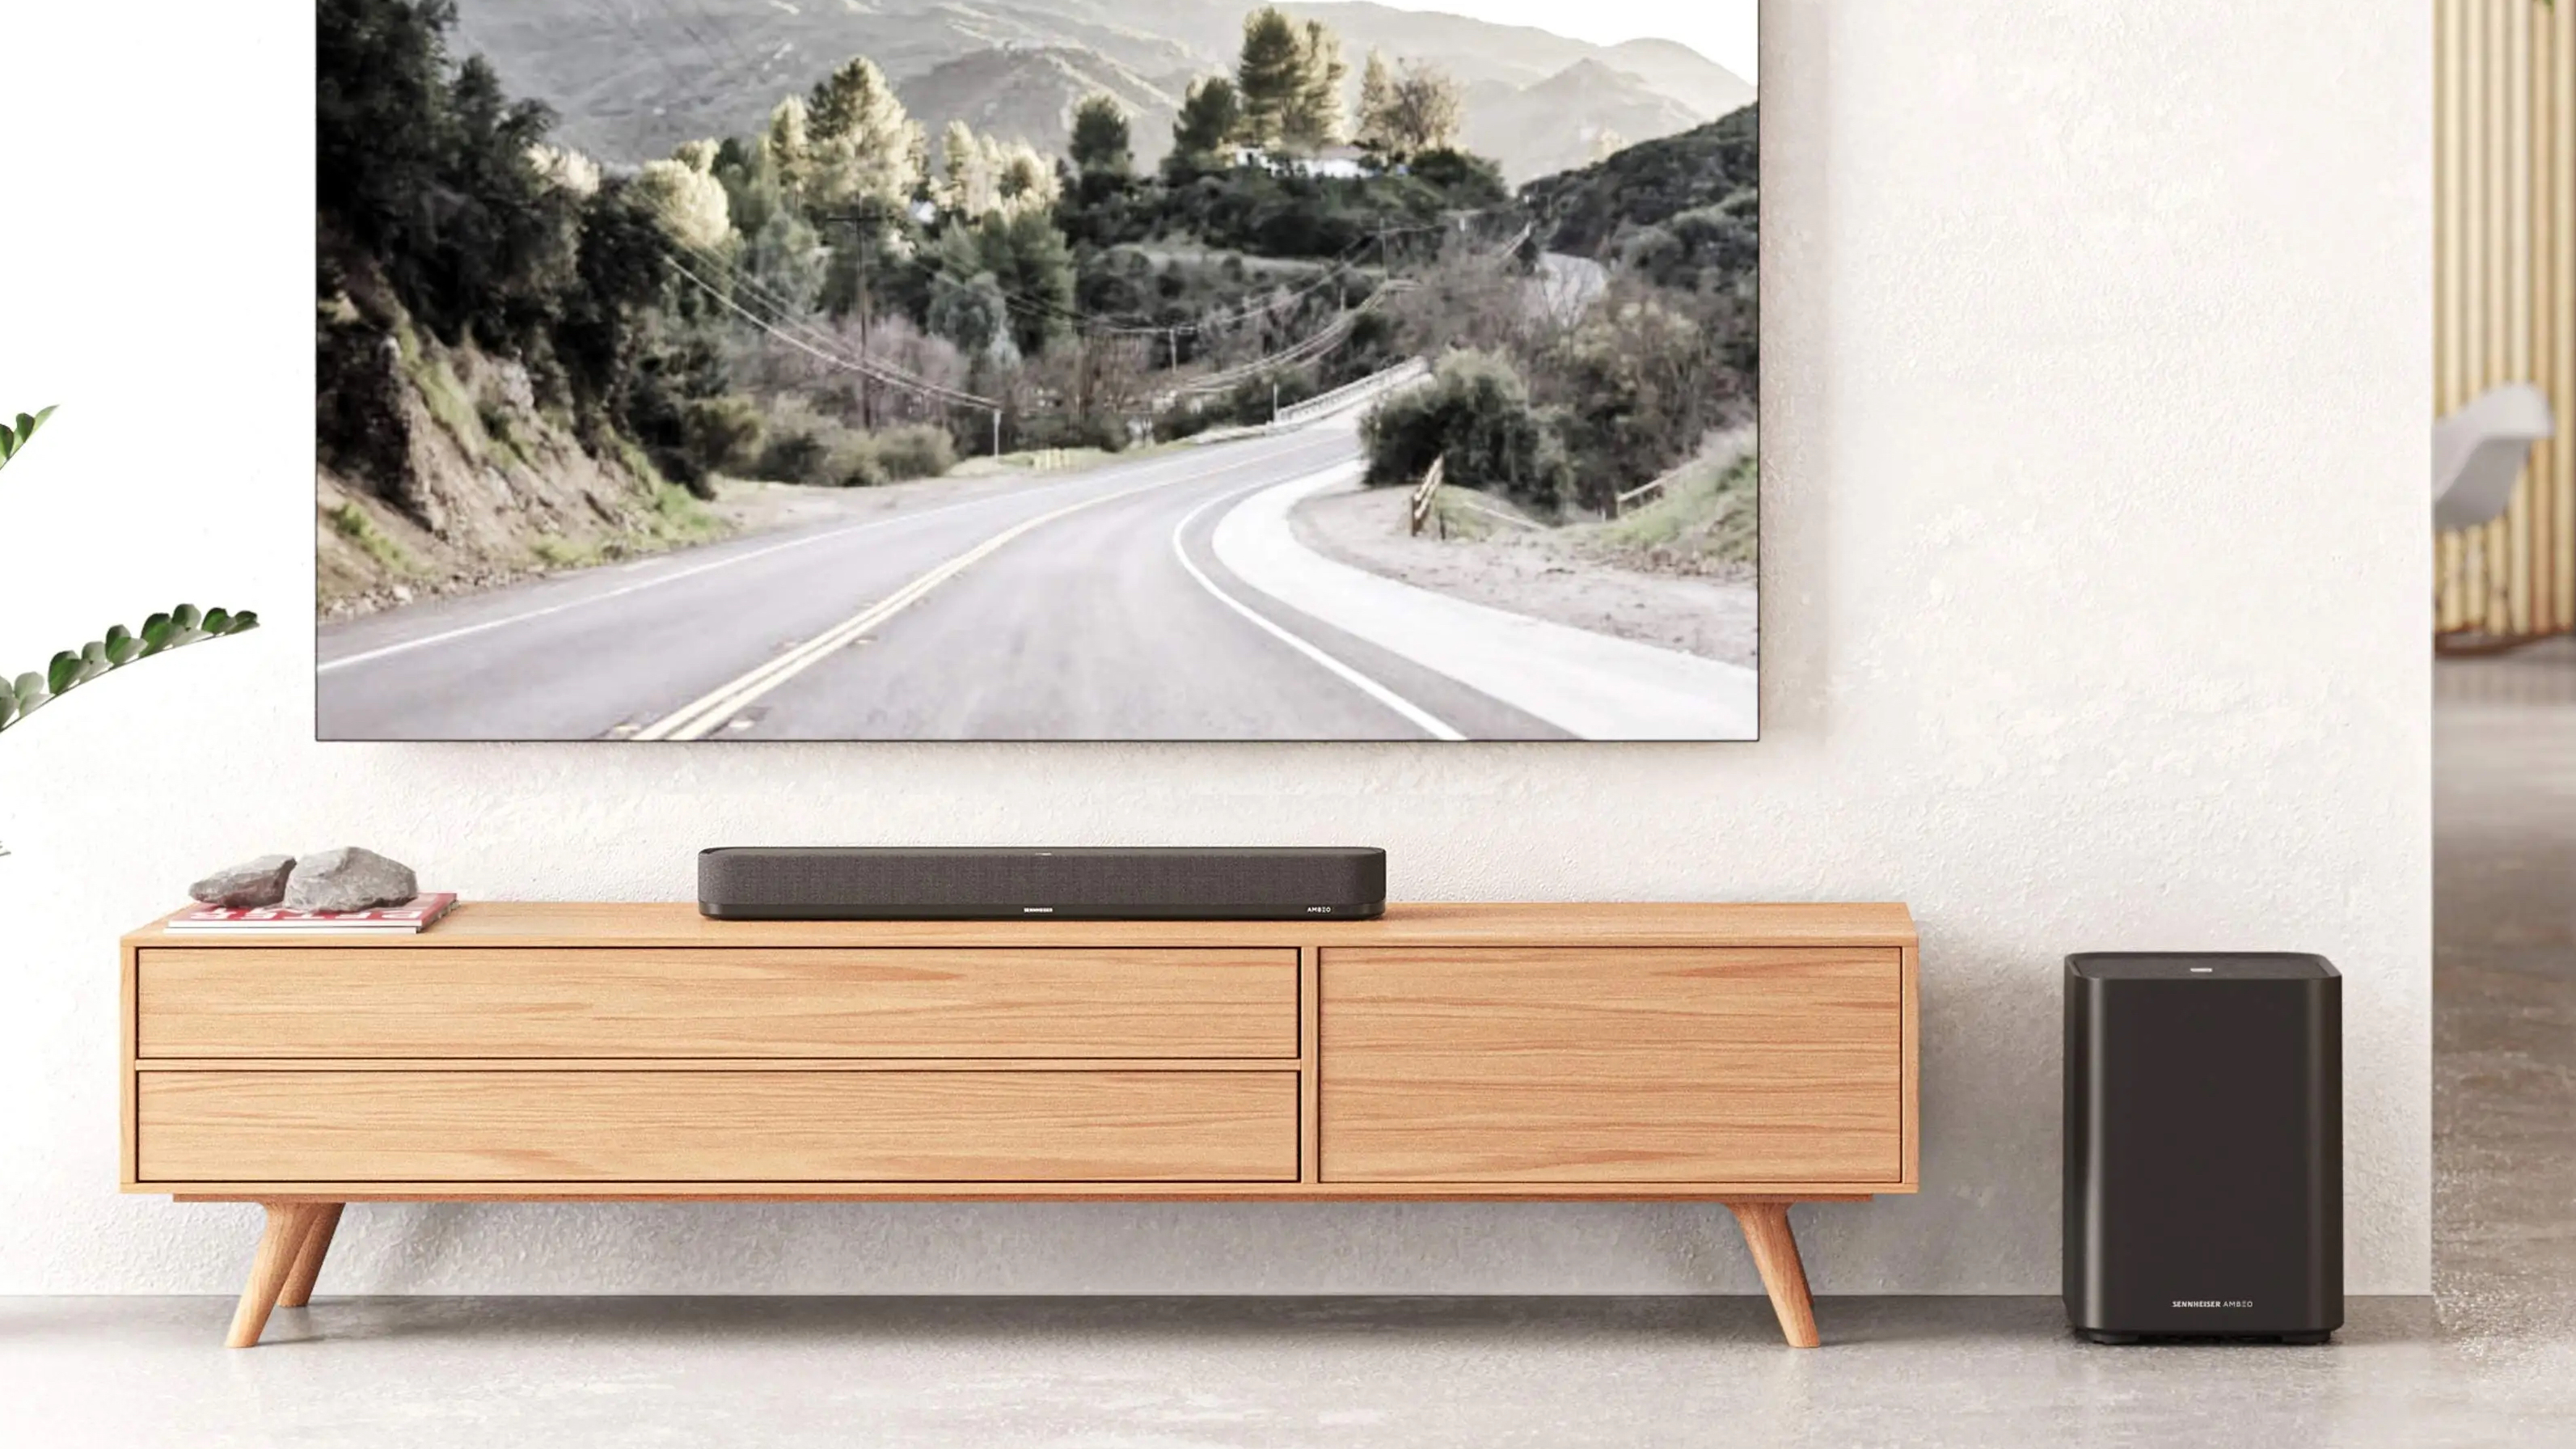 Sennheiser Ambeo Mini soundbar on a wooden surface below a TV